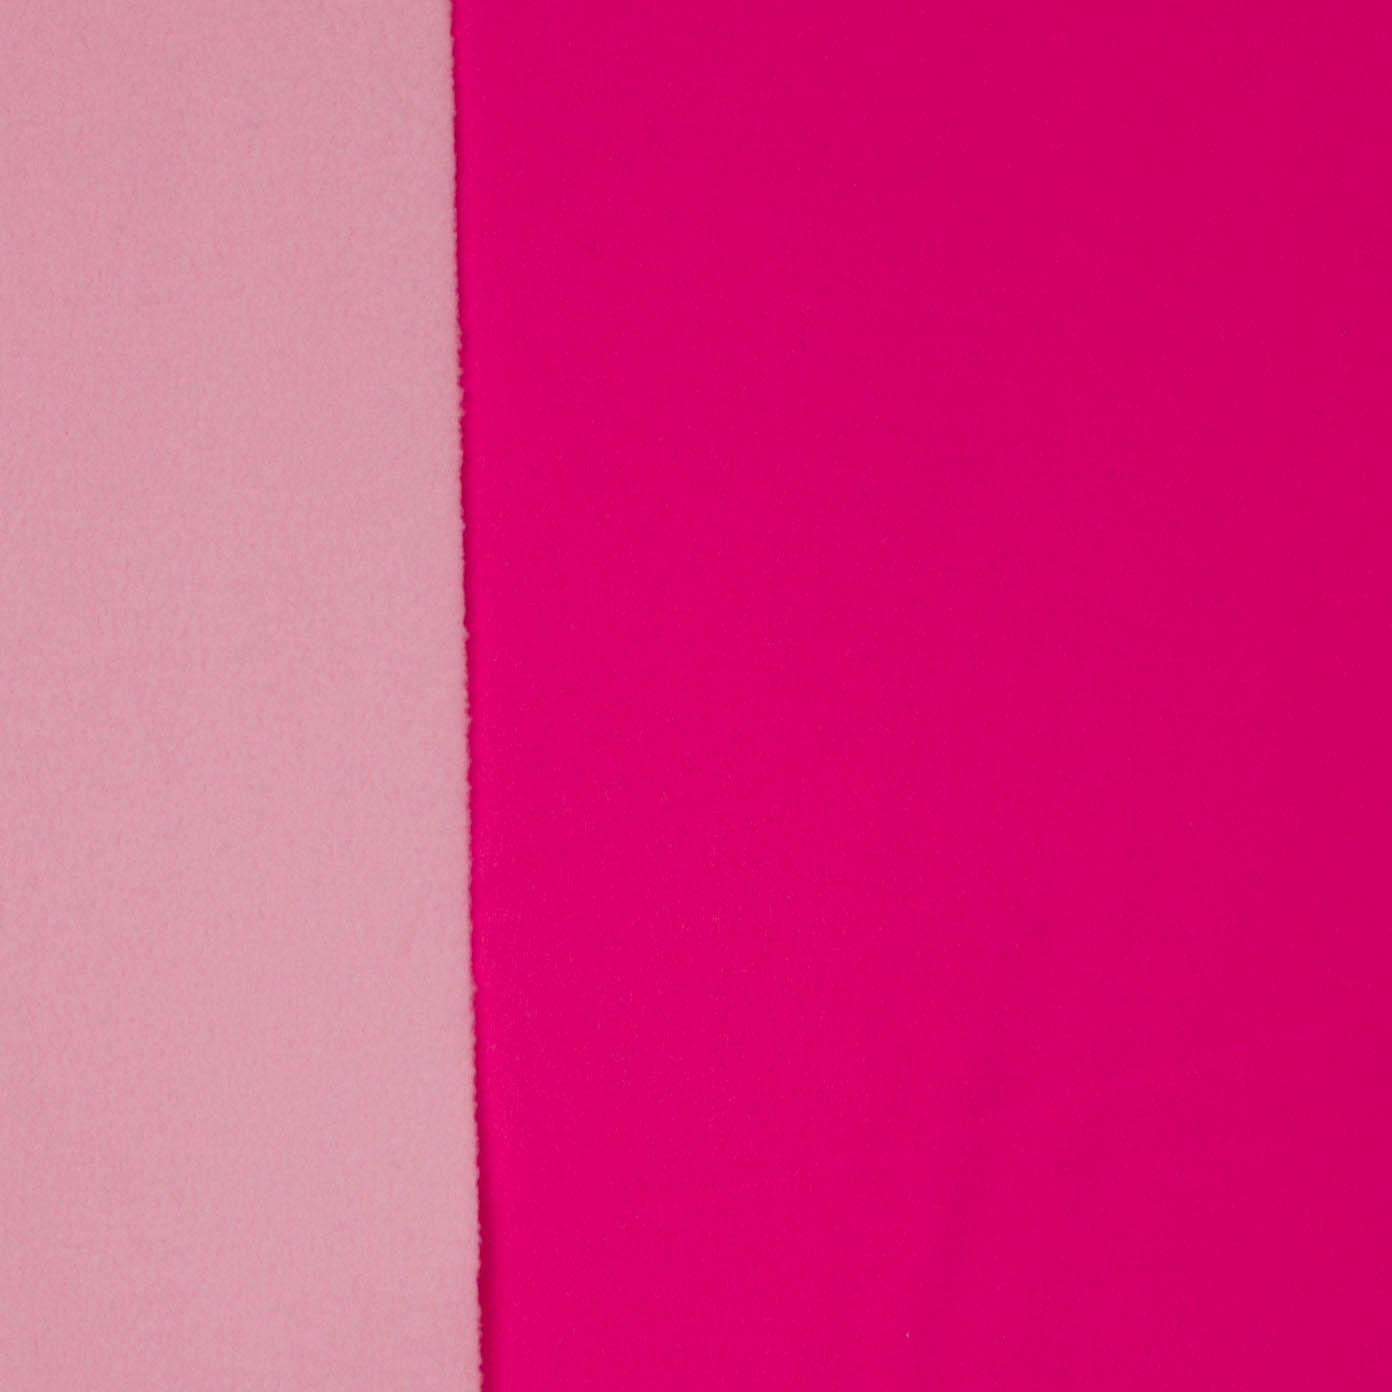 Fluoroze softshell met roze achterkant